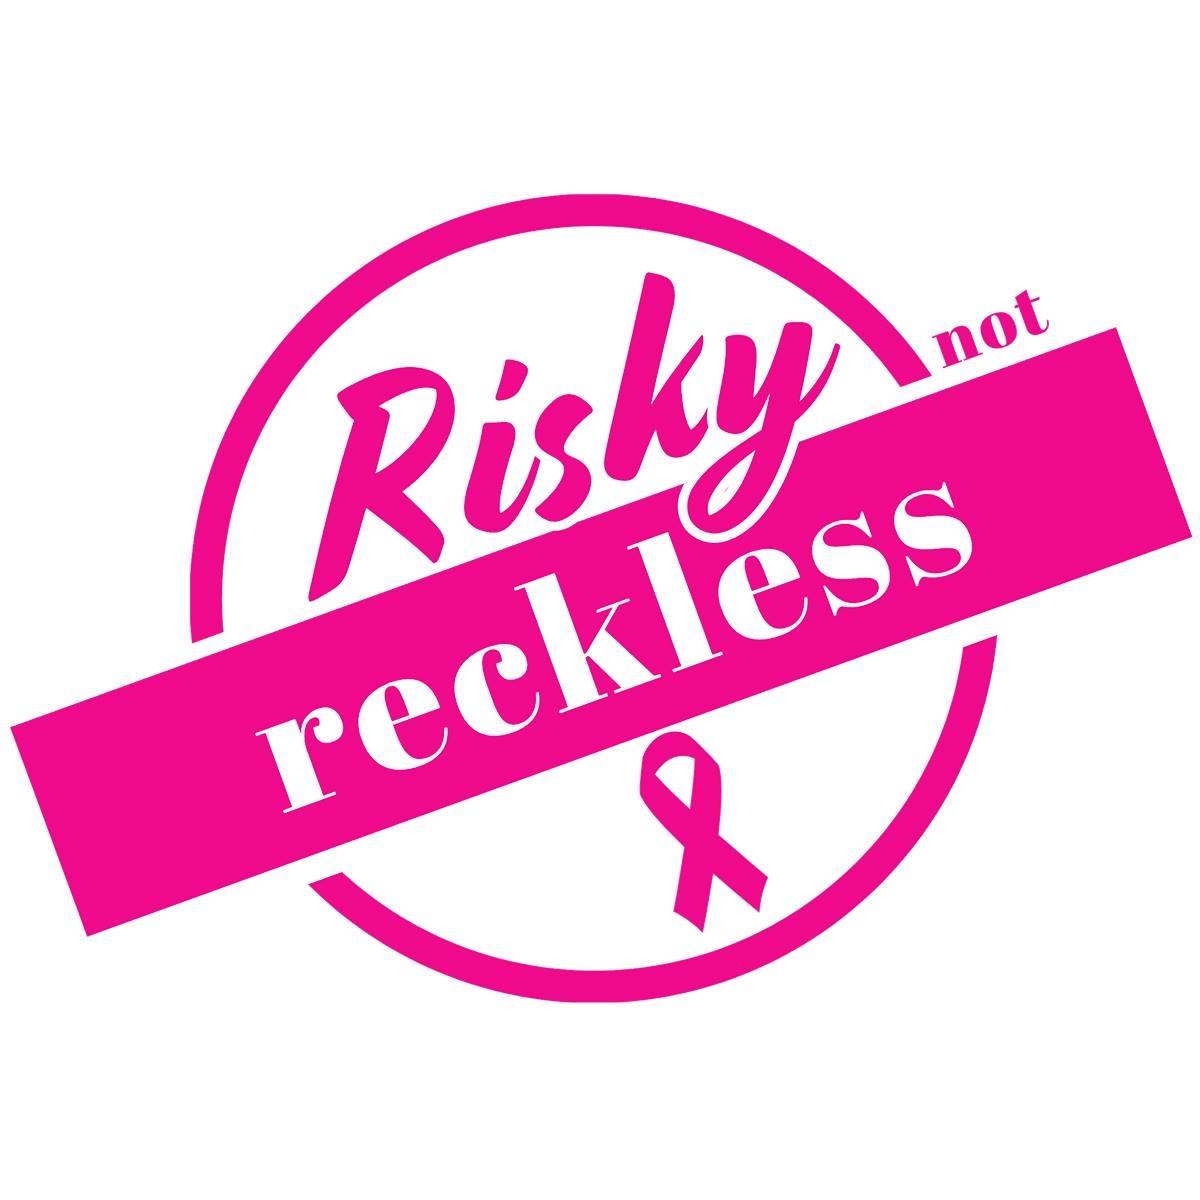 Risky not Reckless logo